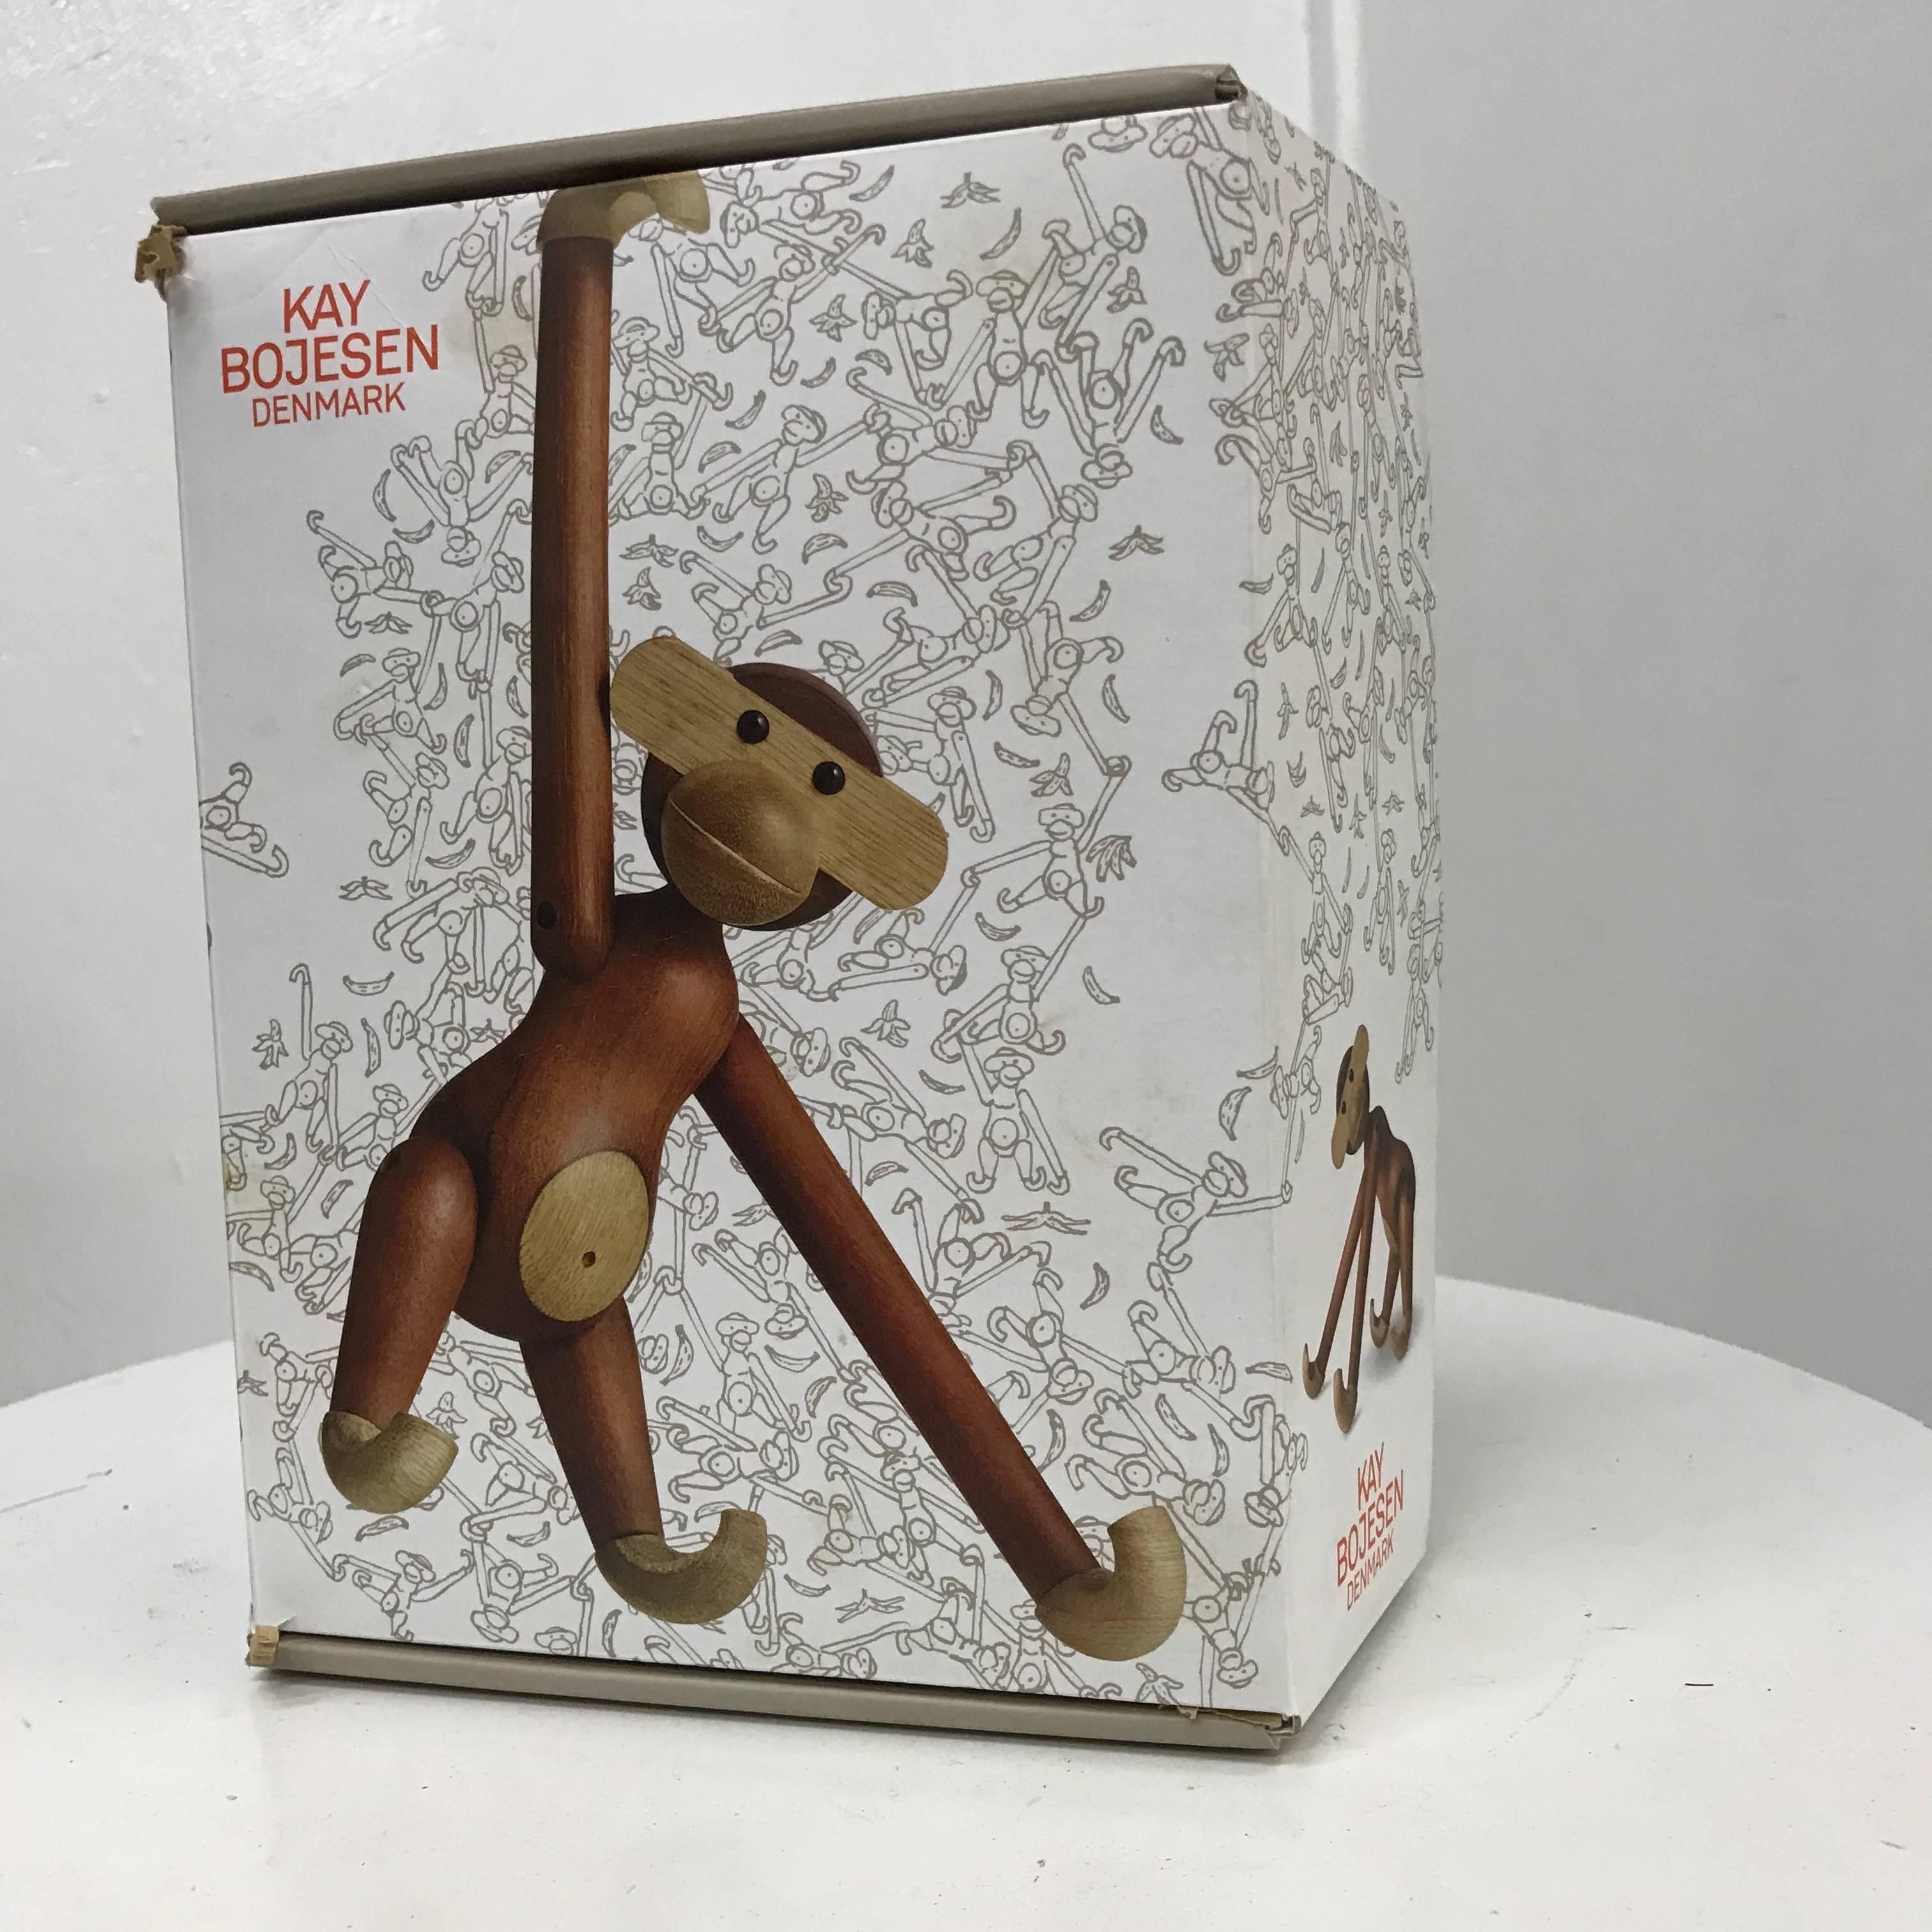 Kay Bojensen, monkey 
Made in Denmark
Satin teak and ebony, 
circa 2000.

    